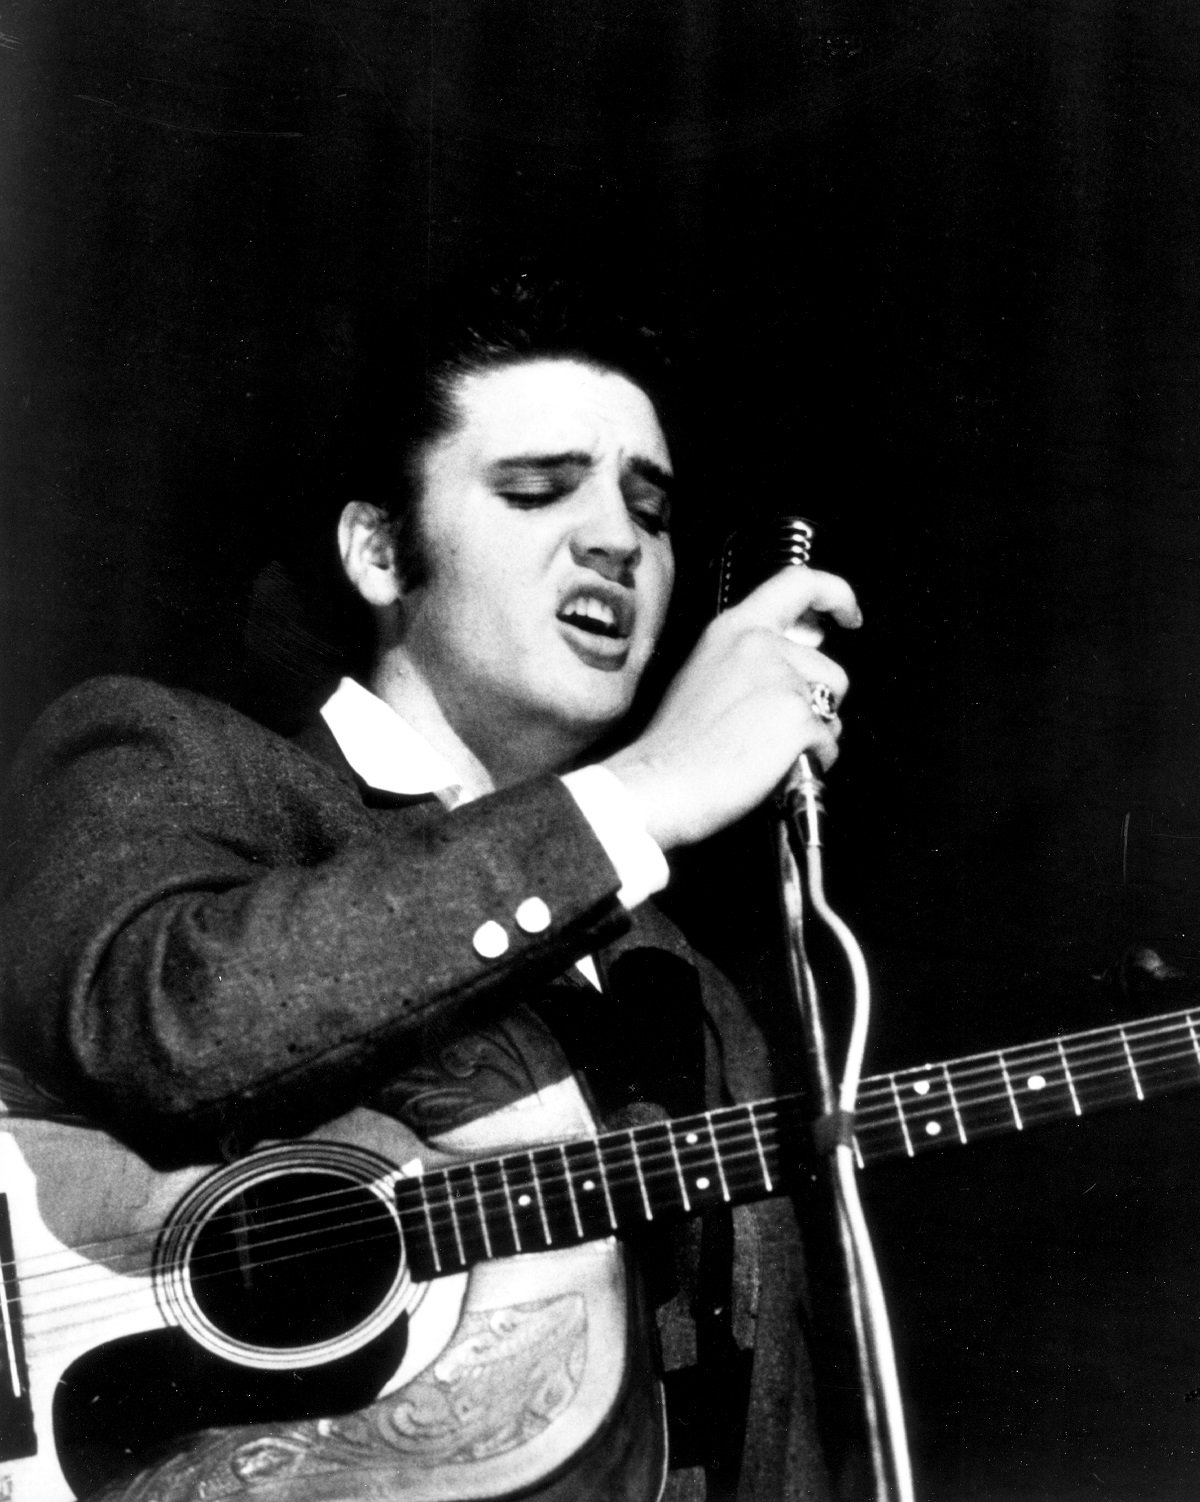 Elvis Presley performing with his acoustic guitar in 1955